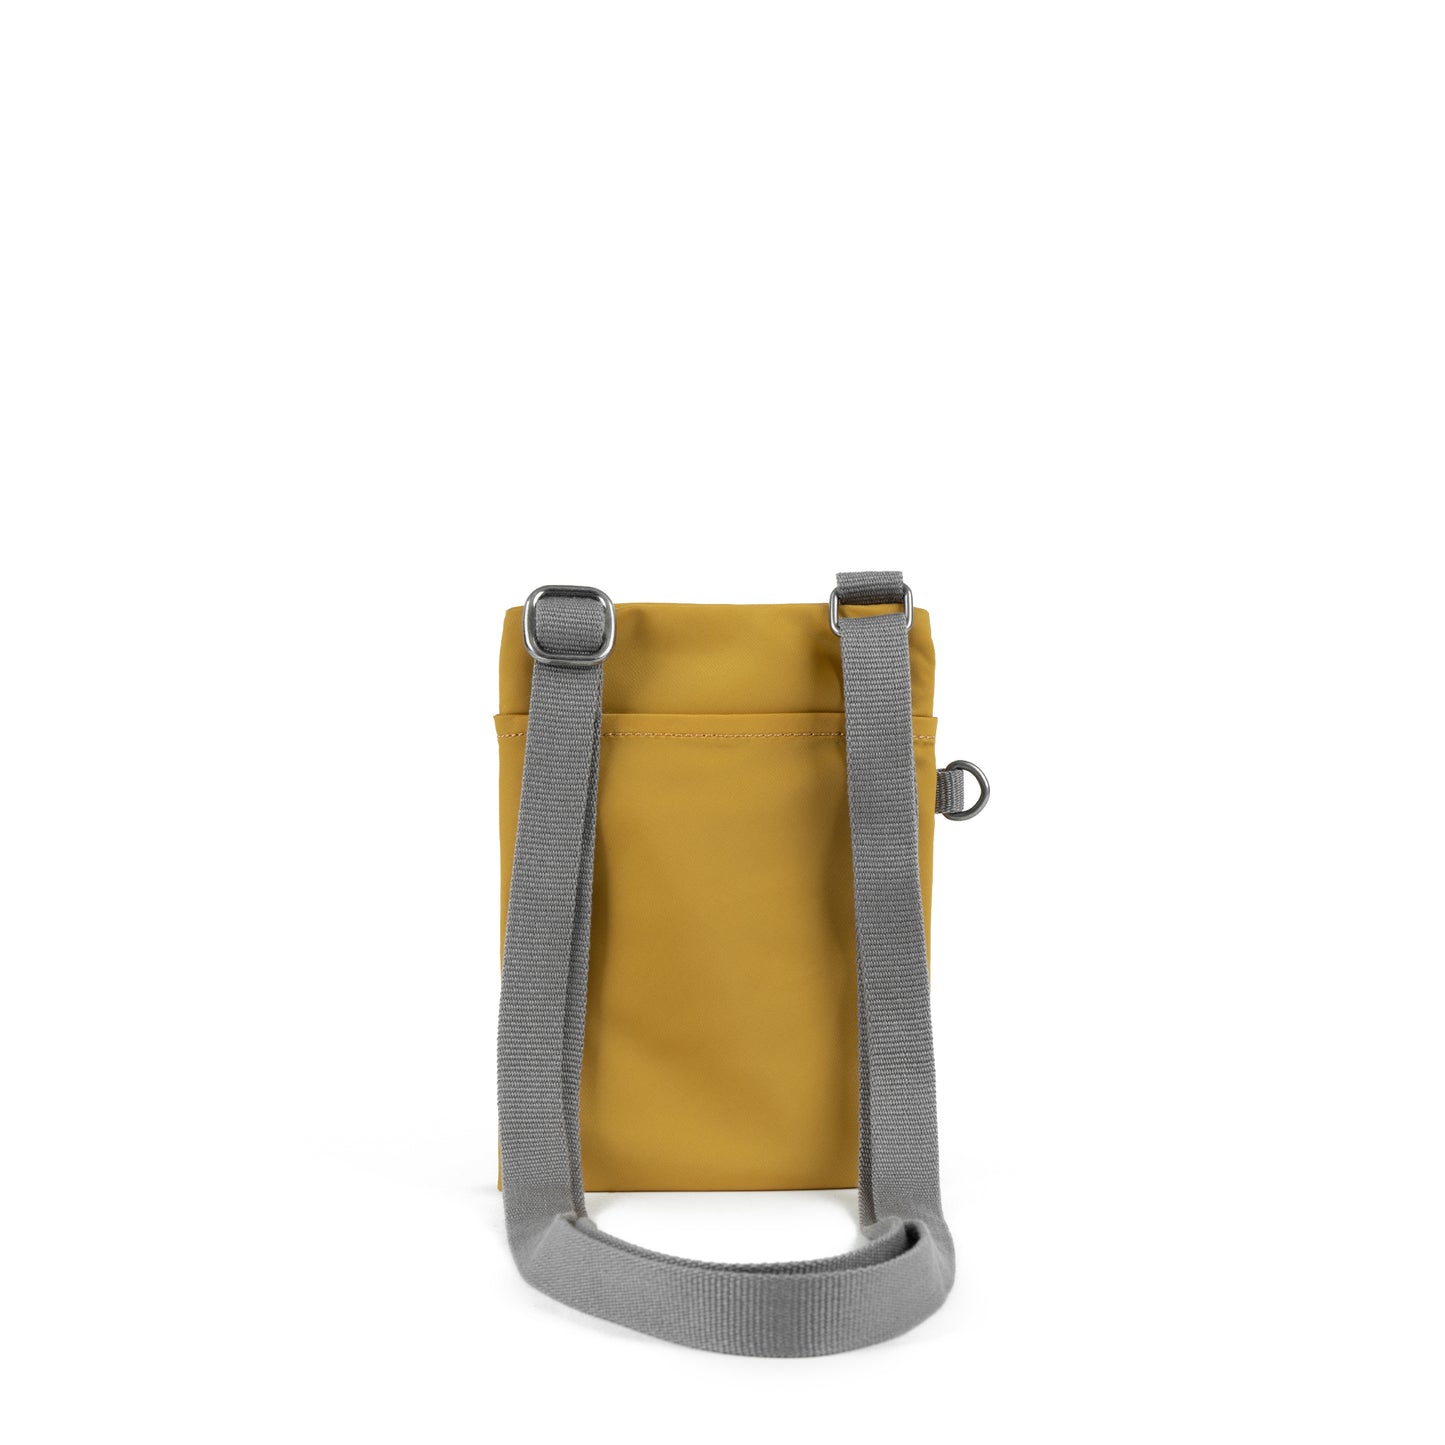 Roka Chelsea Crossbody Phone Bag – Corn Yellow